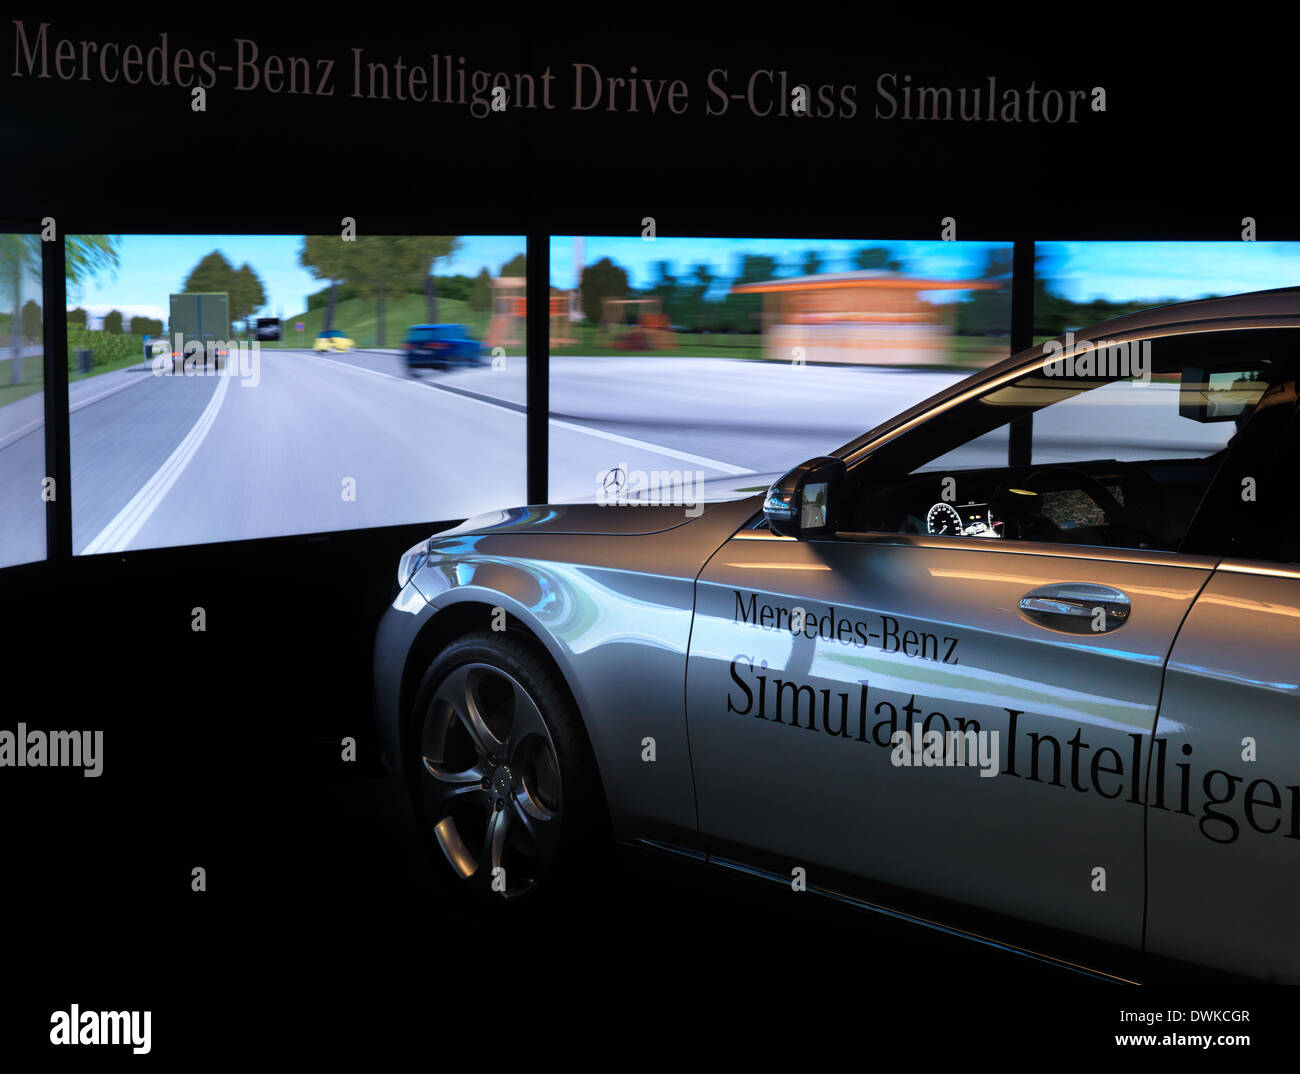 Mercedes-Benz Intelligent Drive S-Class Simulator Stock Photo